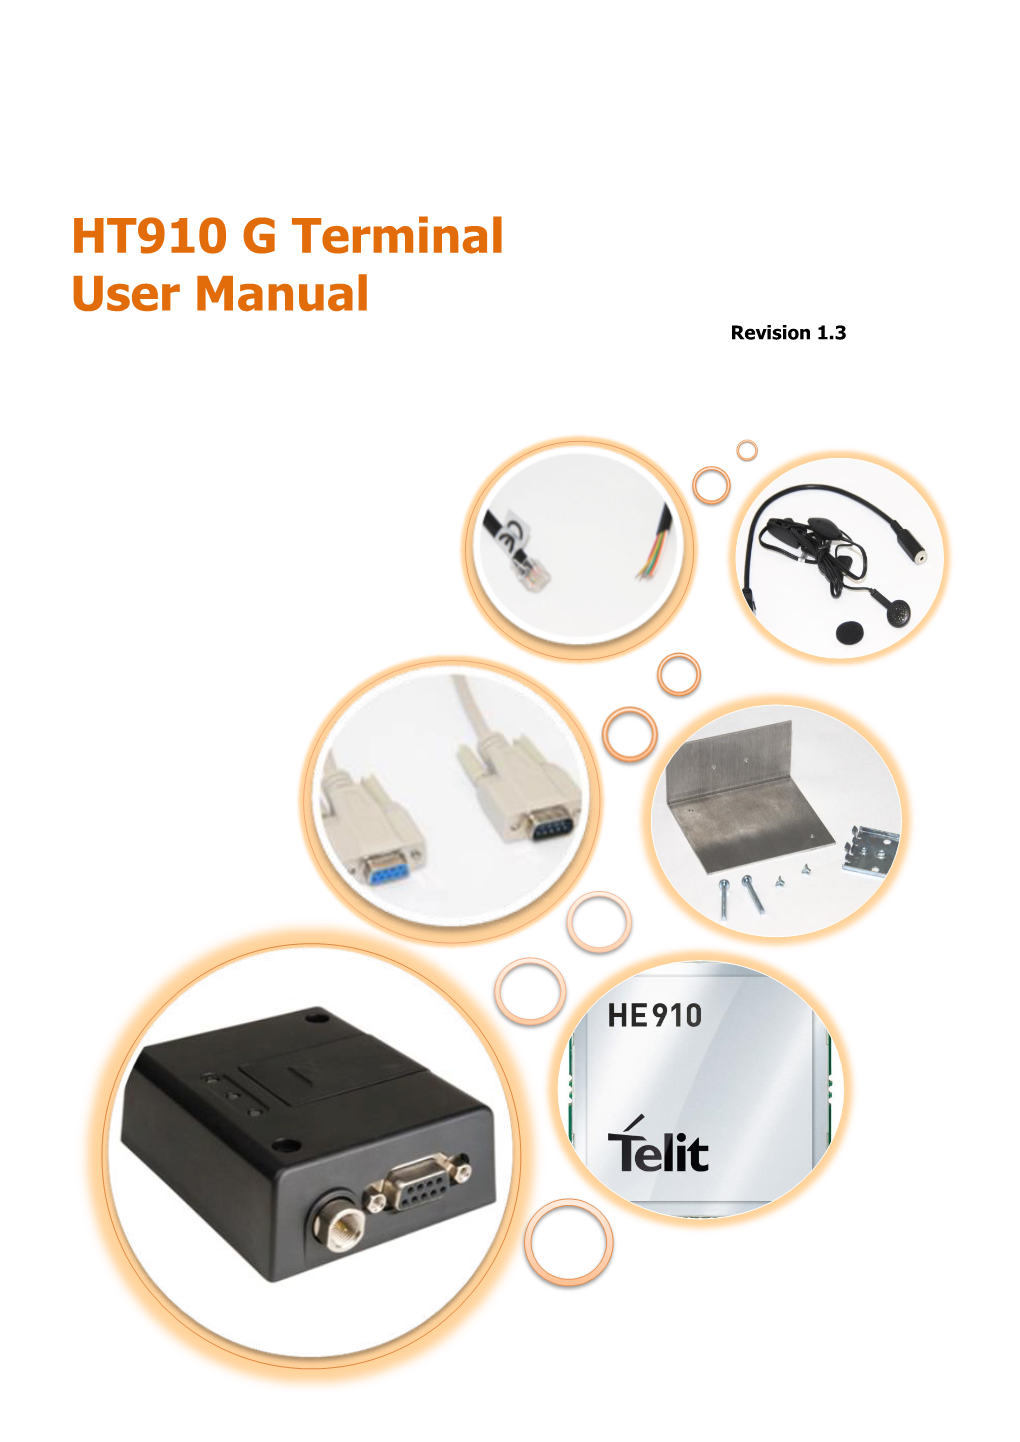 HT910 G Terminal User Manual Revision 1.3